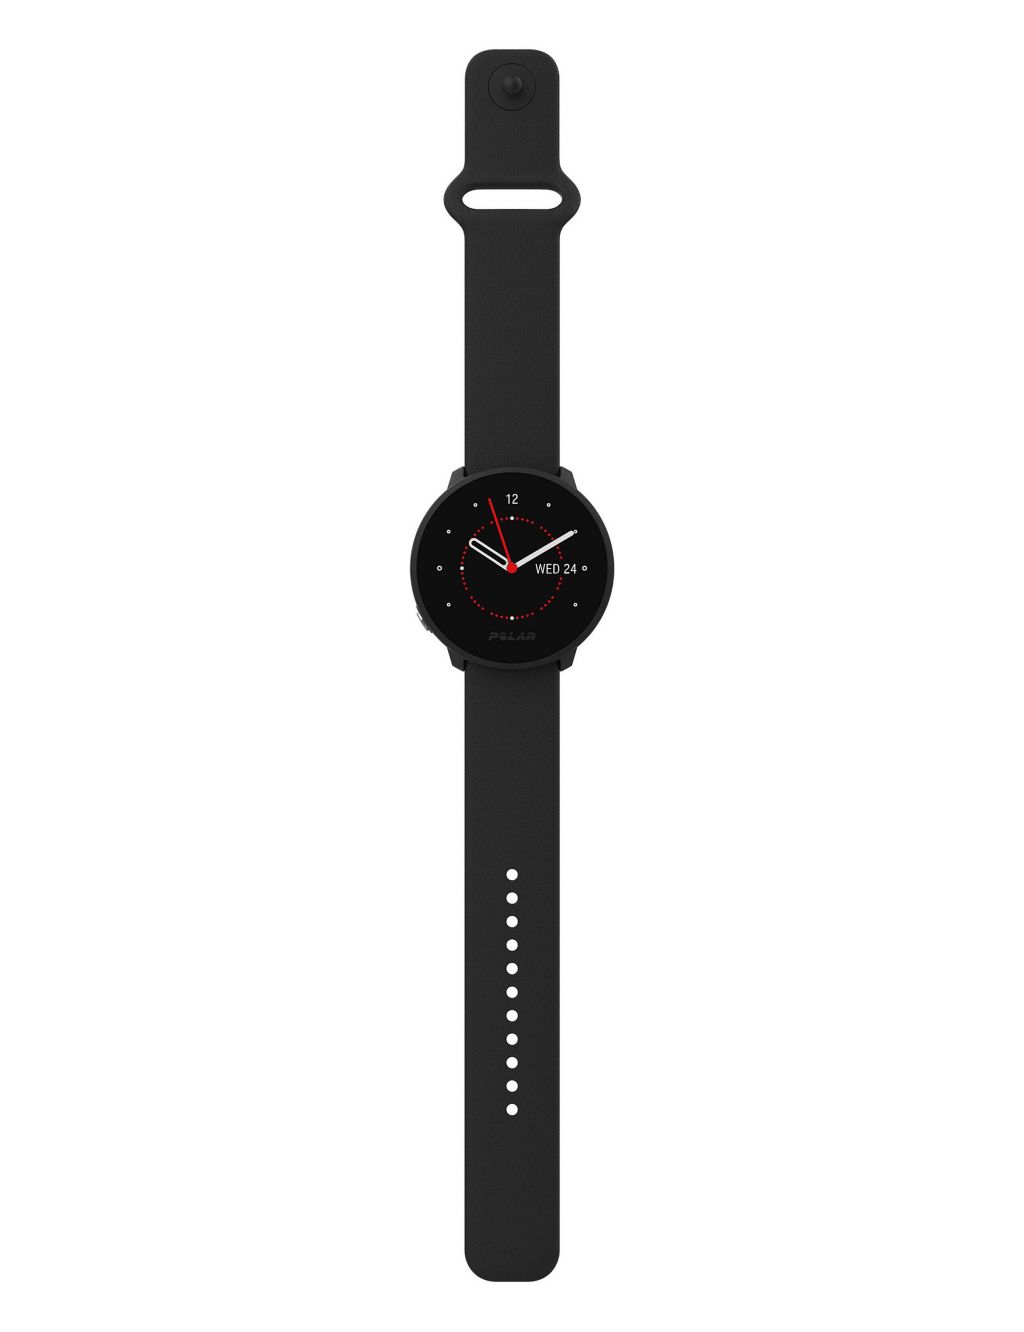 Polar Unite Fitness Tracker Black Silicone Smartwatch 2 of 8